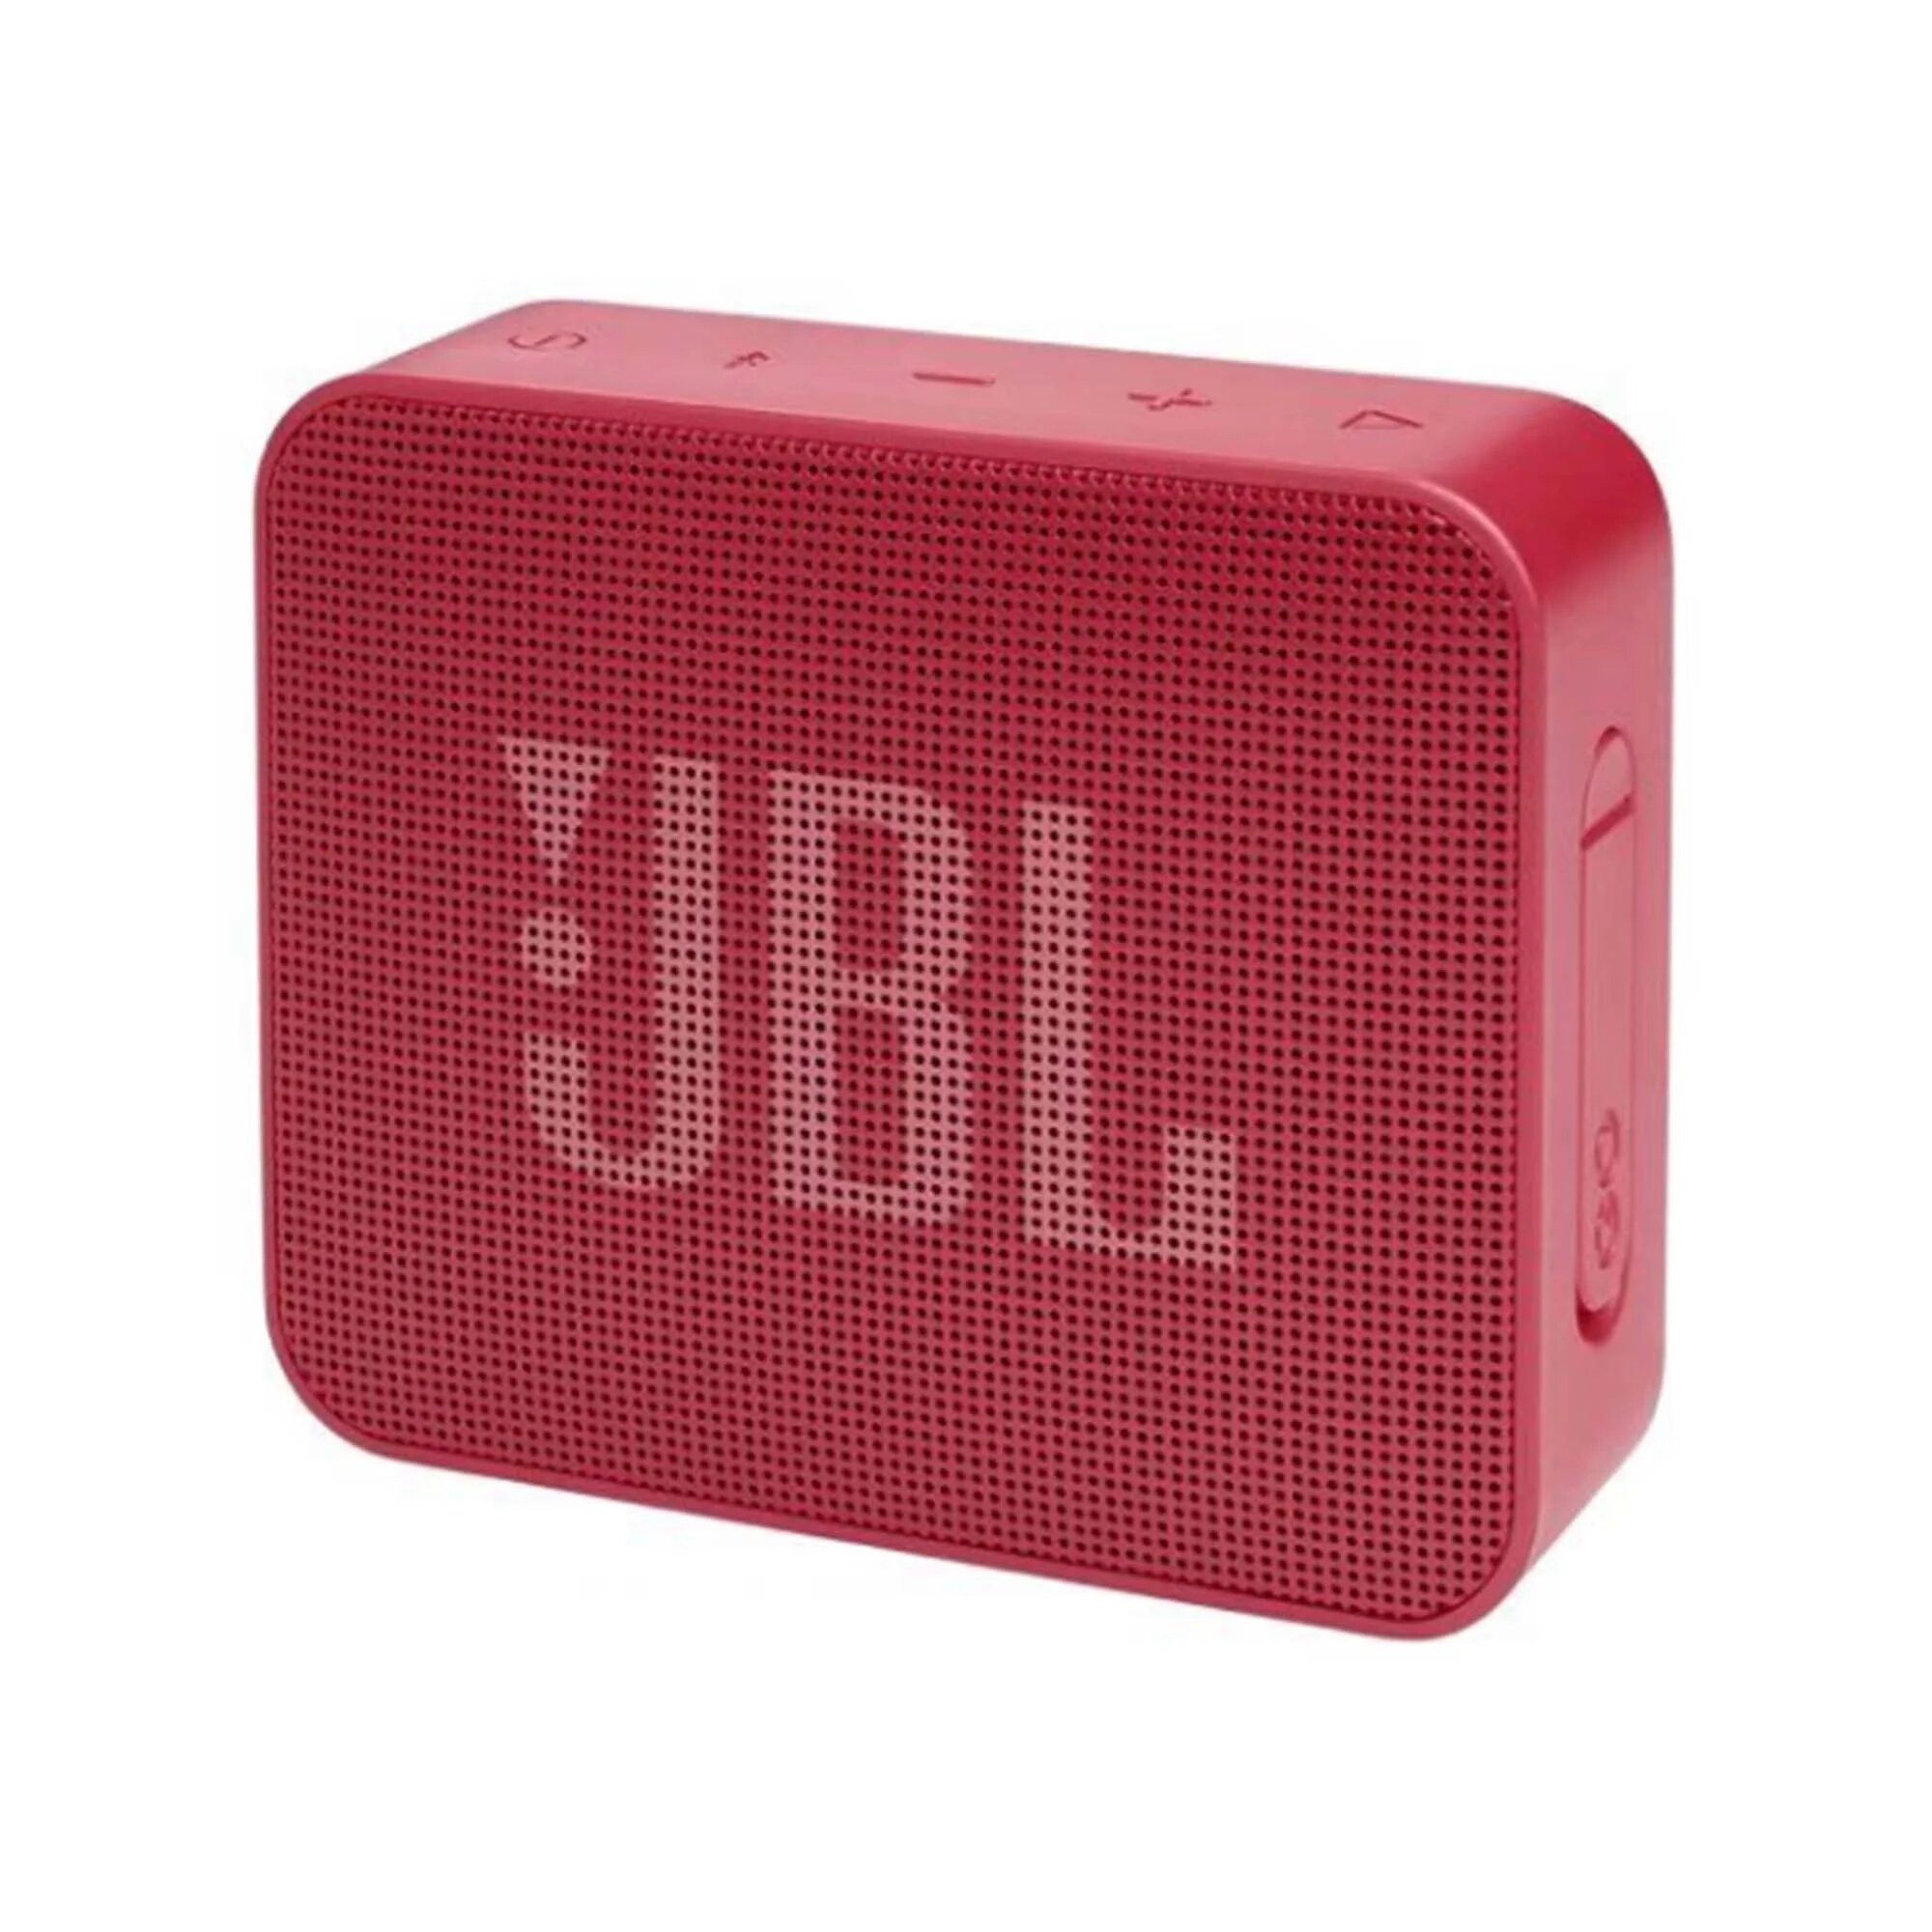 Портативная акустика JBL Go Essential Red портативная колонка jbl partybox on the go черный